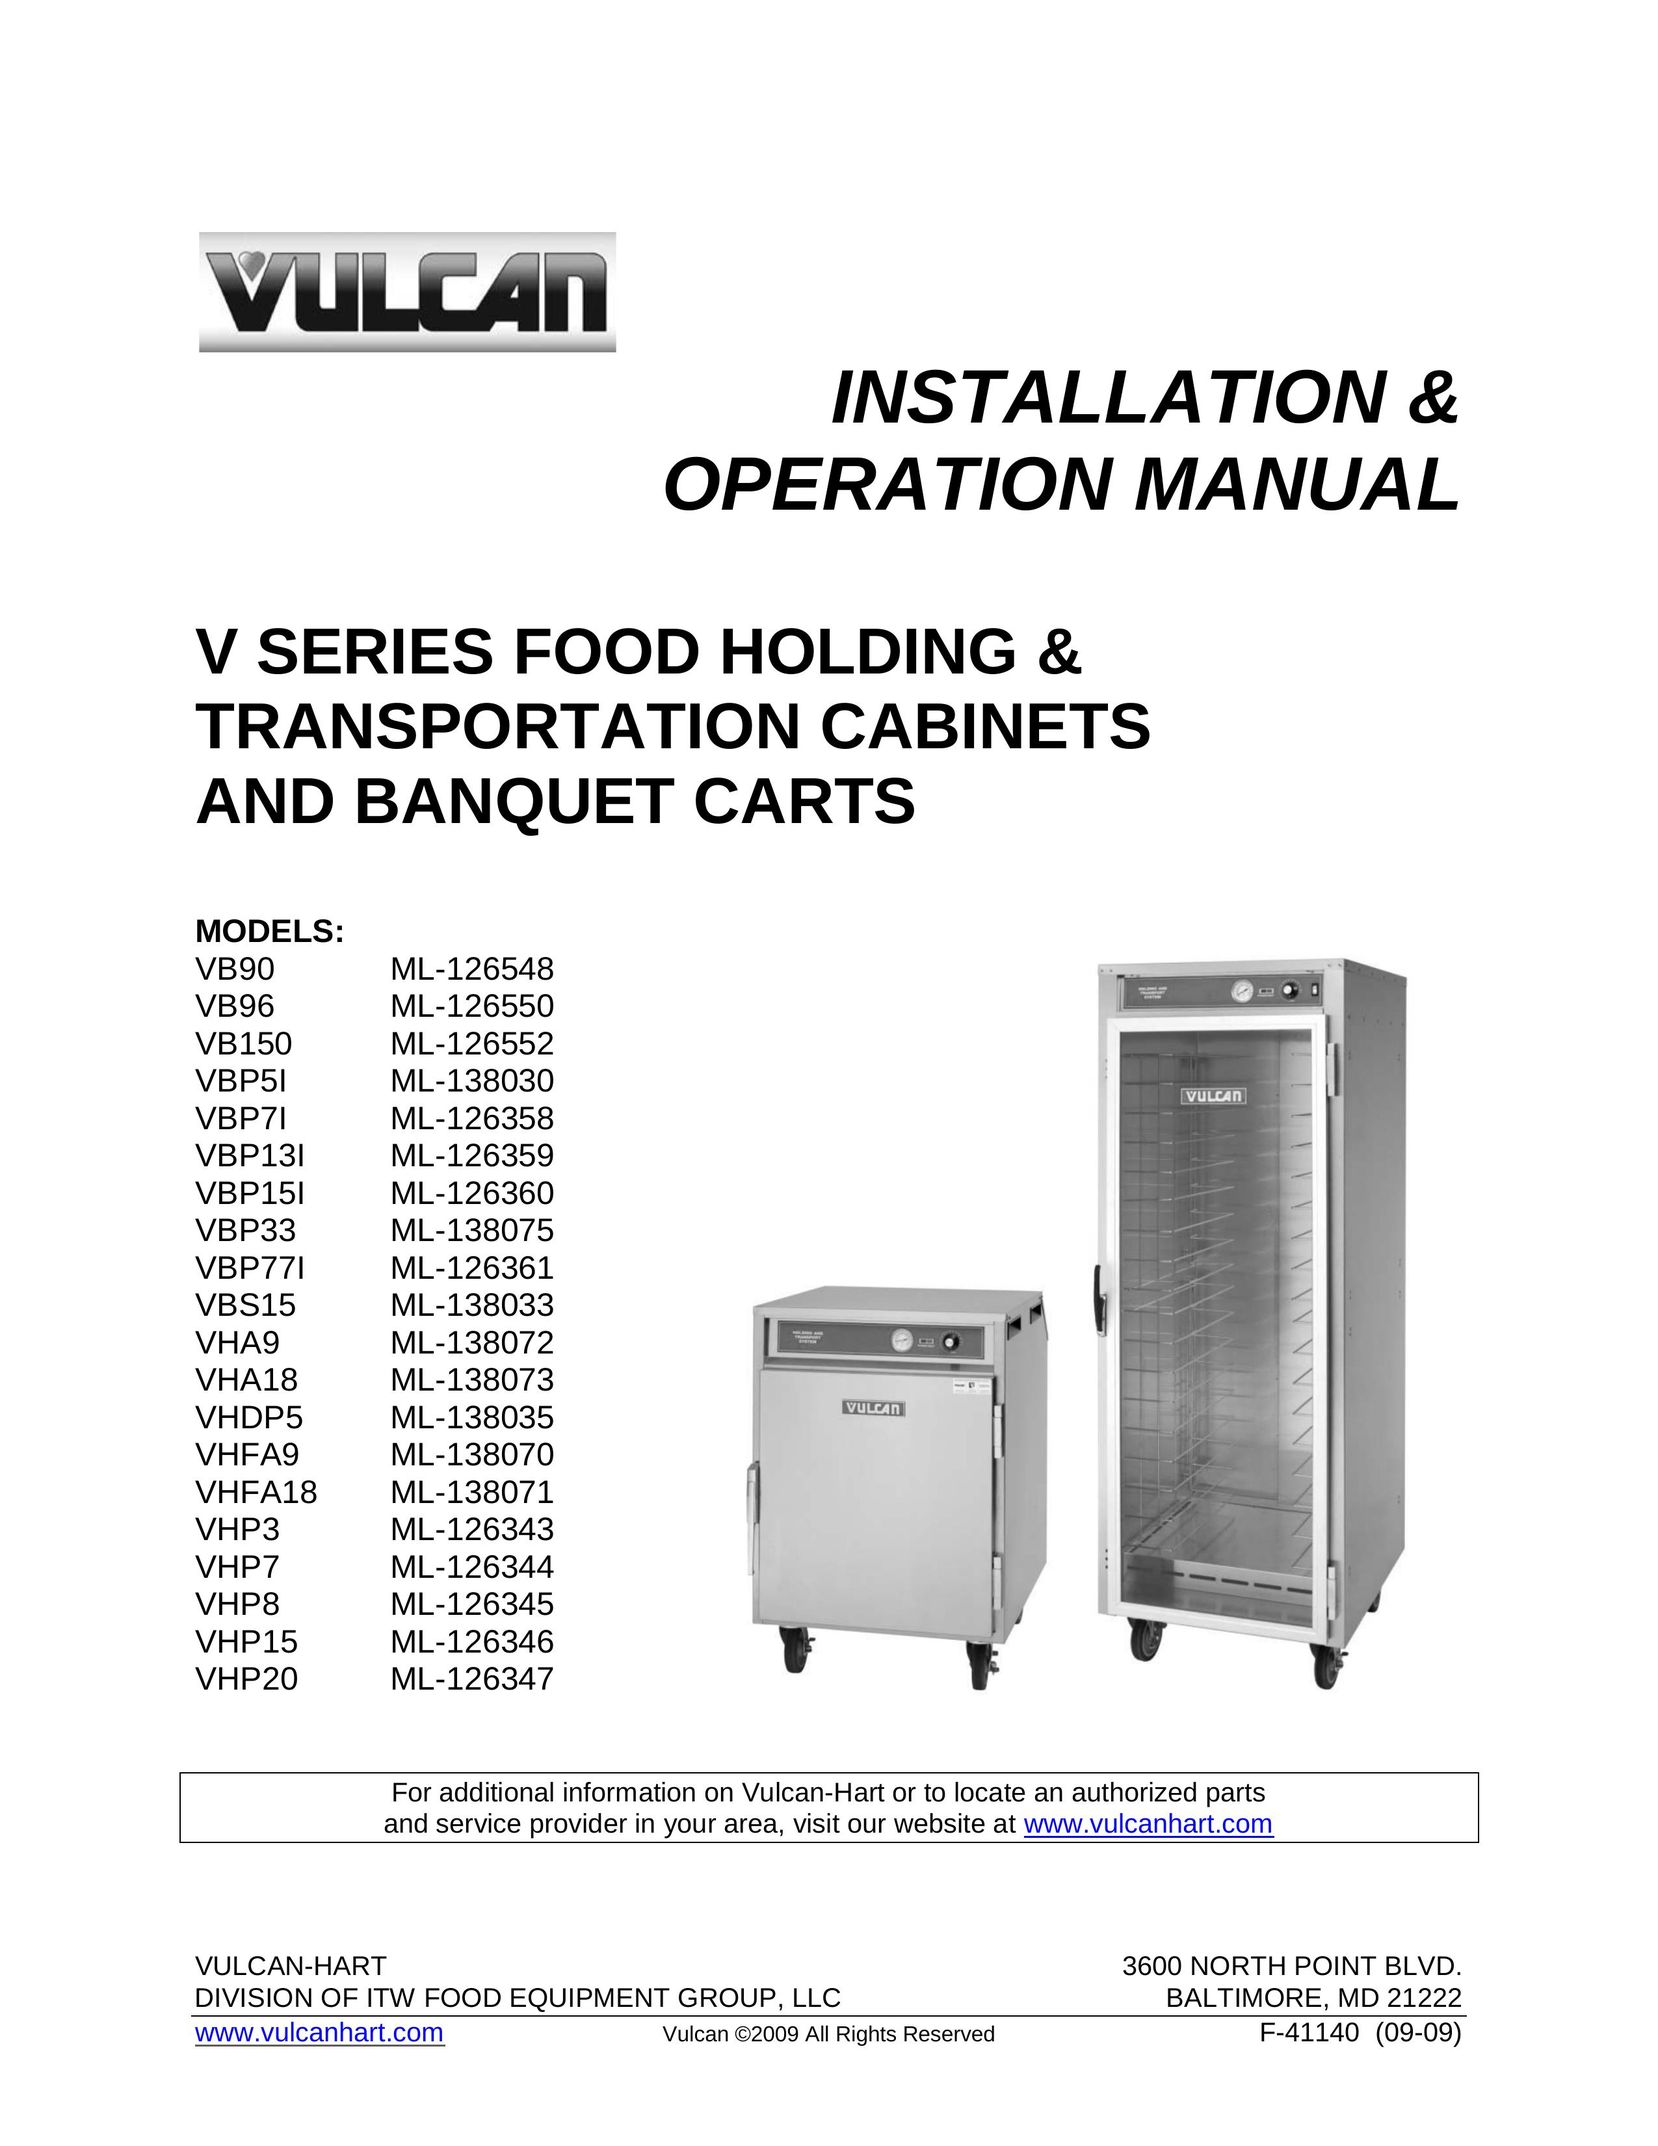 Vulcan-Hart VHA9 ML-138072 Food Warmer User Manual